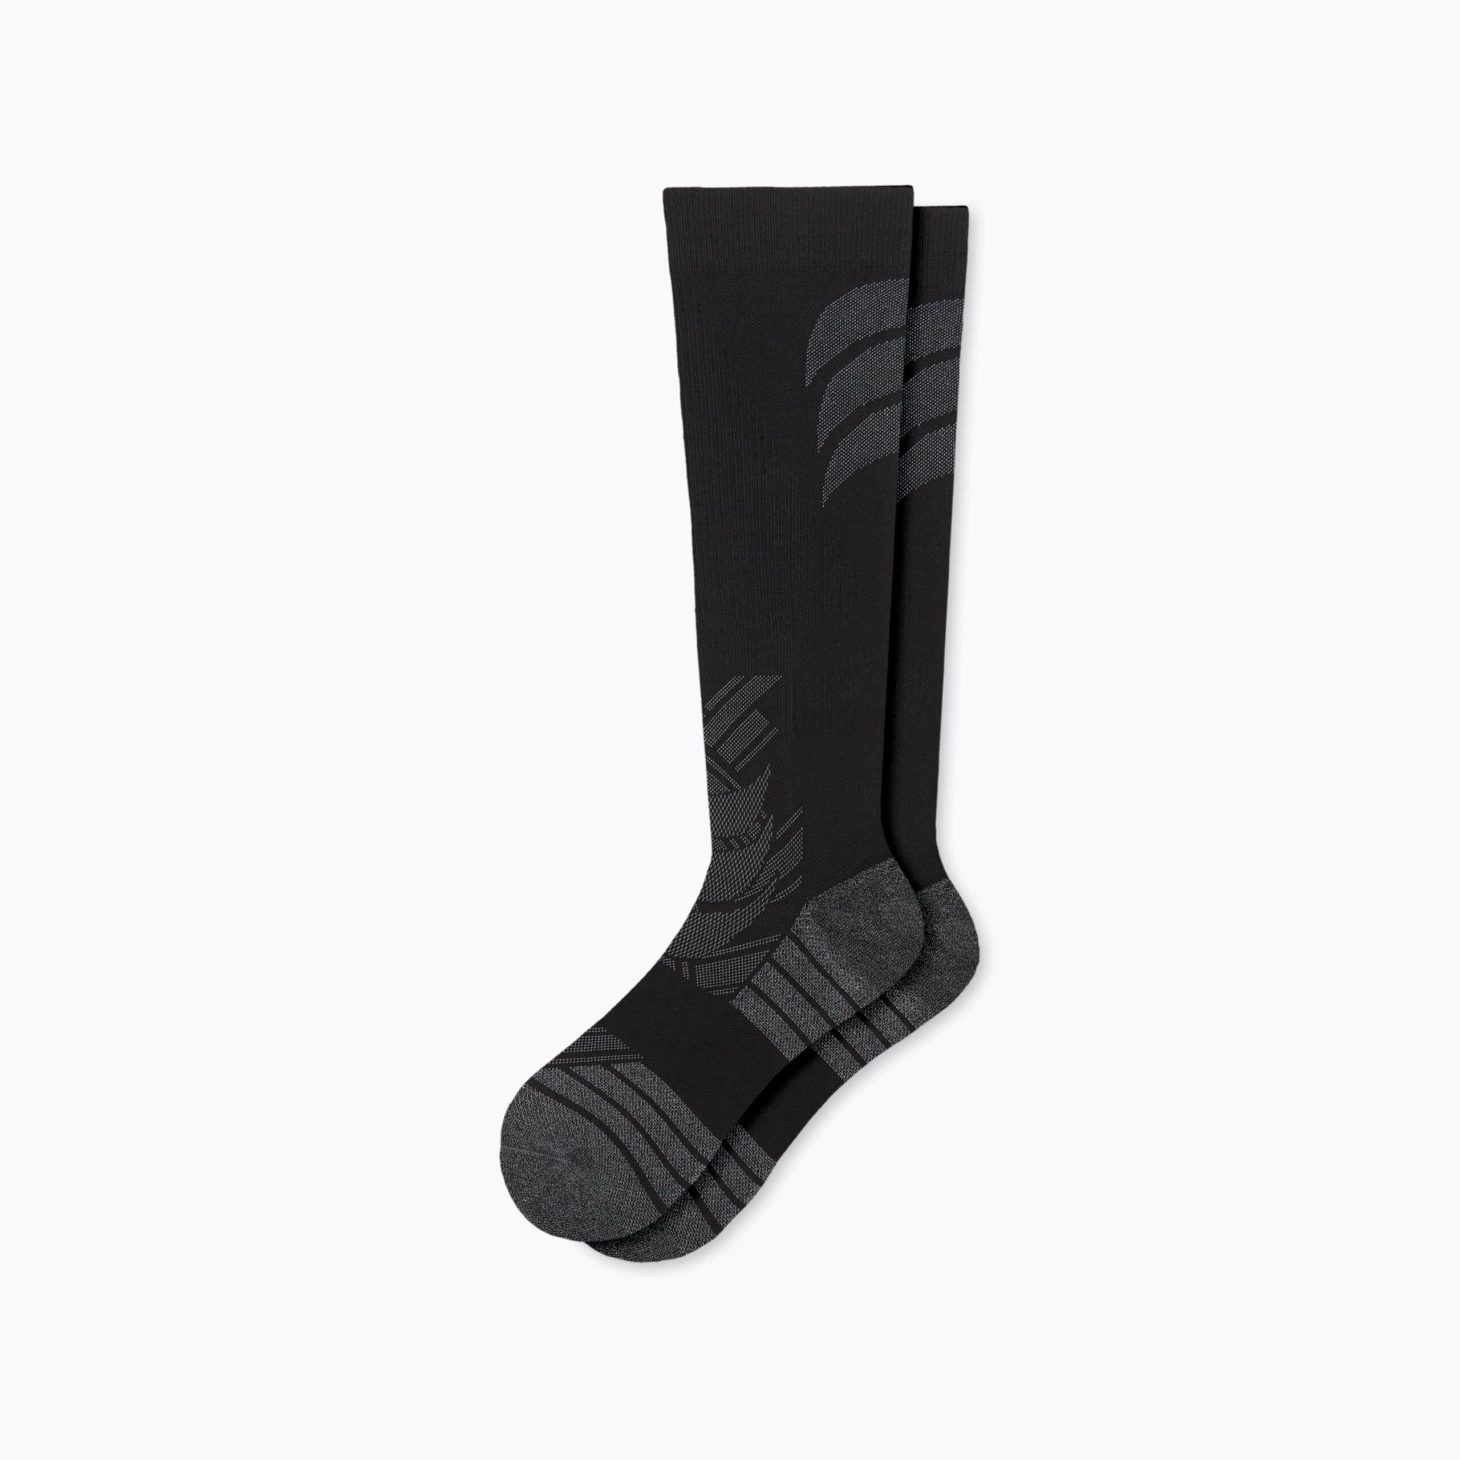 comrad athletic socks, best compression socks for travel